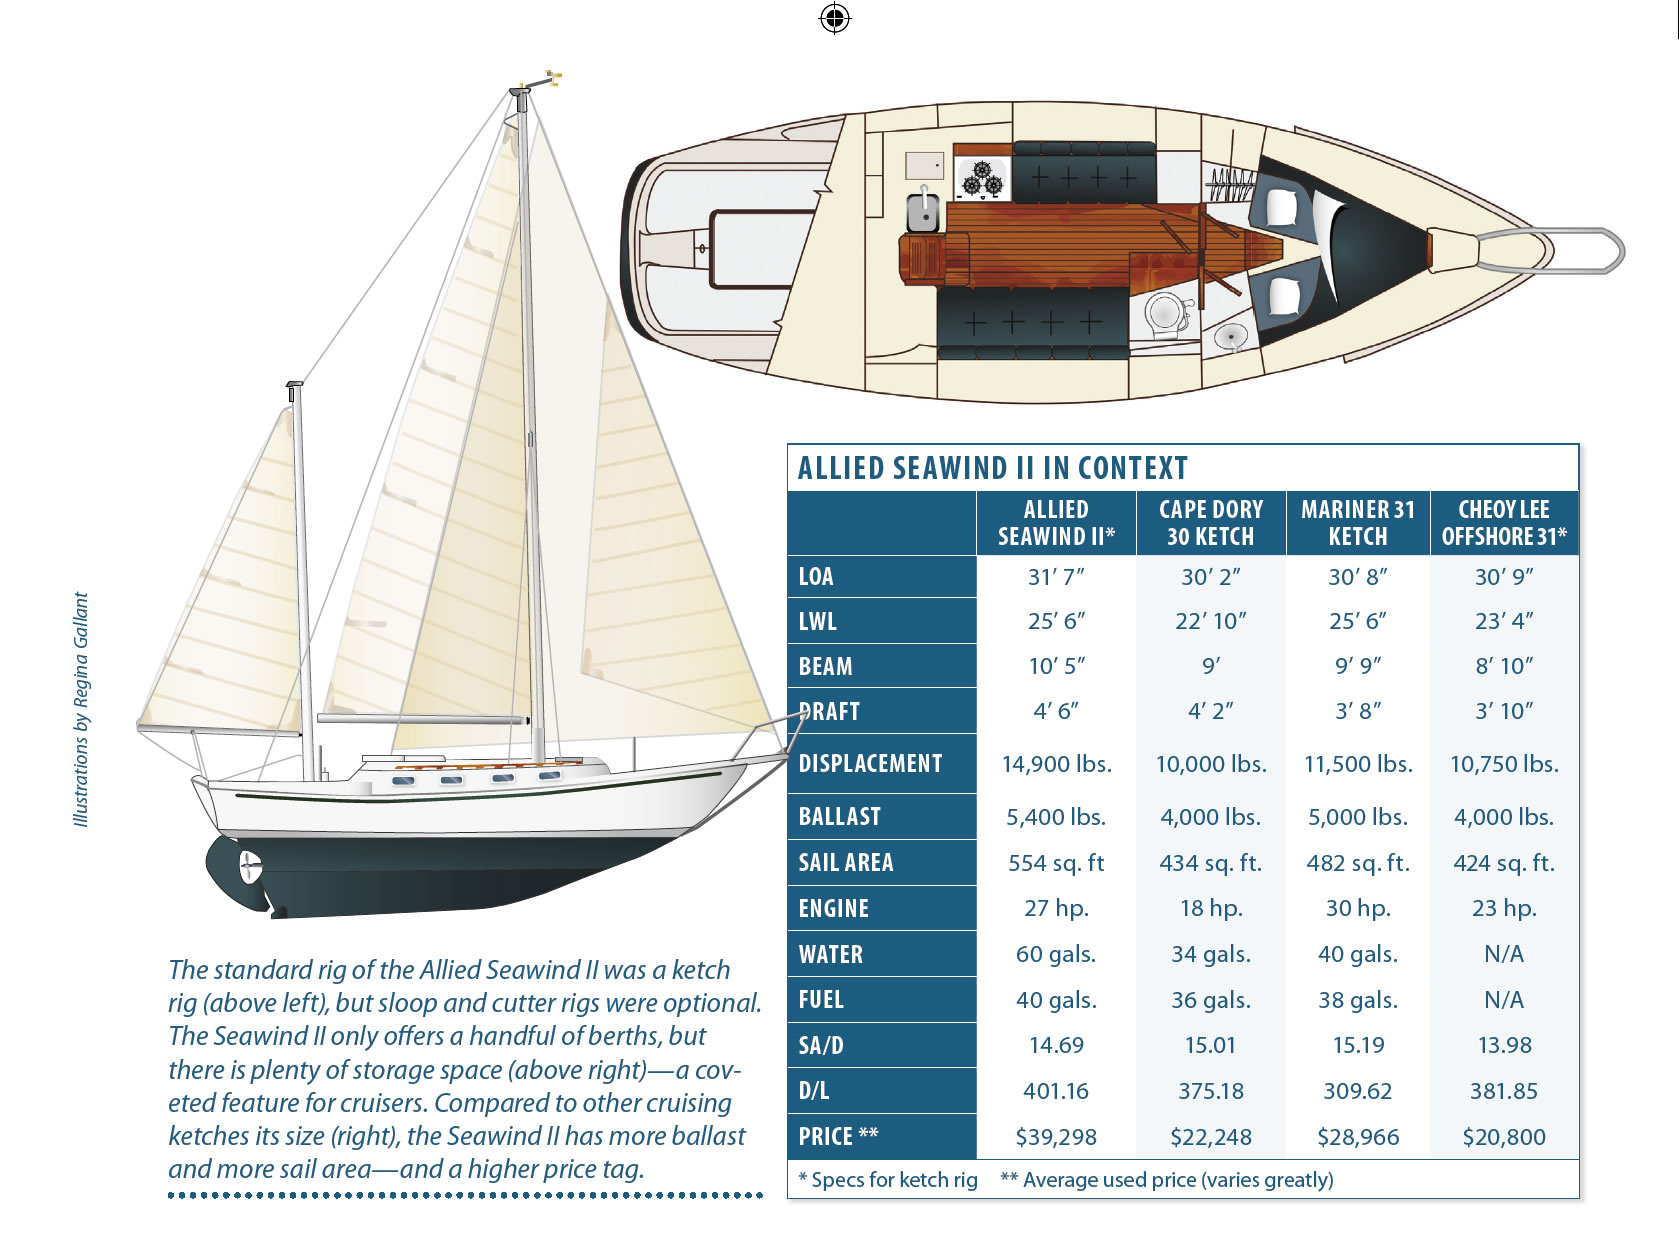 Capable Cruiser: The Seawind II